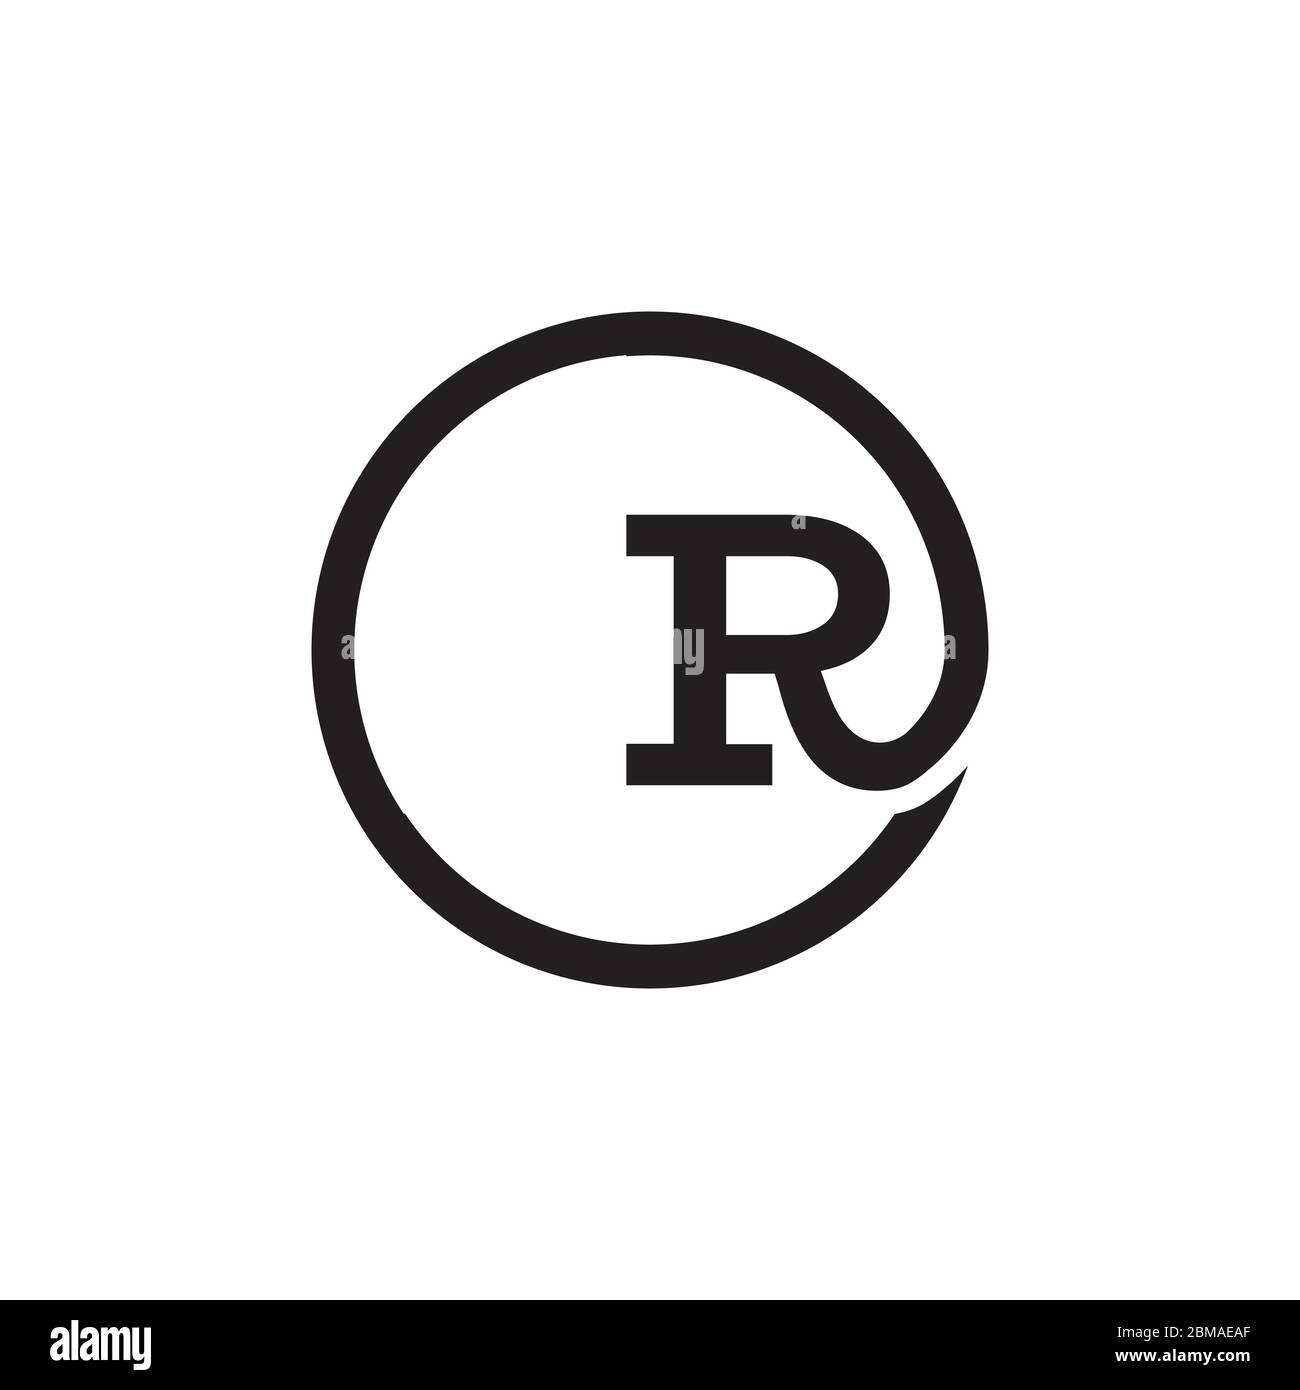 В черном круге буква. Буква s в круге. Логотип буква а в круге. Буква r в круге. Товарный знак с буквой r.